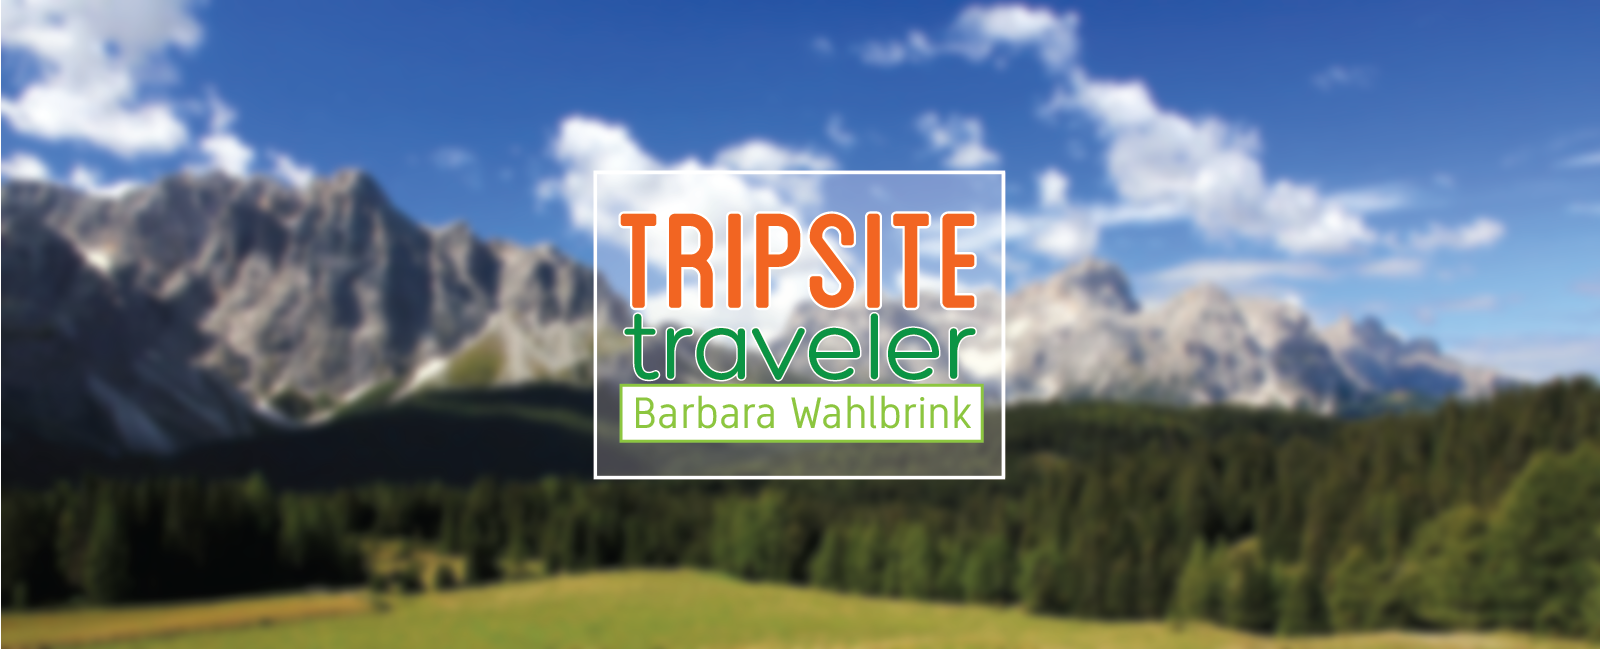 Trisite Traveler Barbara Walhbrink